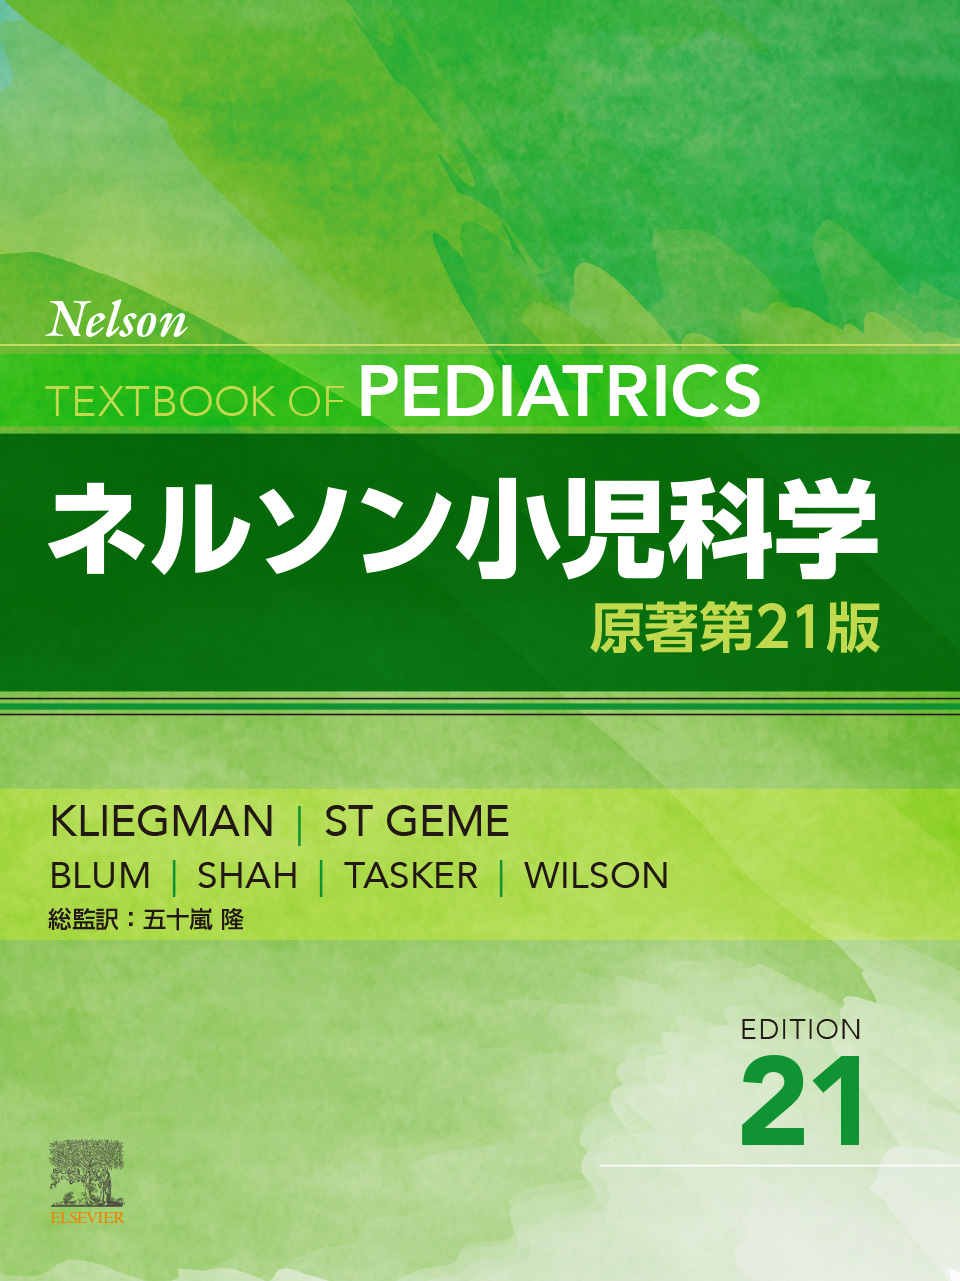 Online eBook Library : Nelson Textbook of Pediatrics,21st ed.